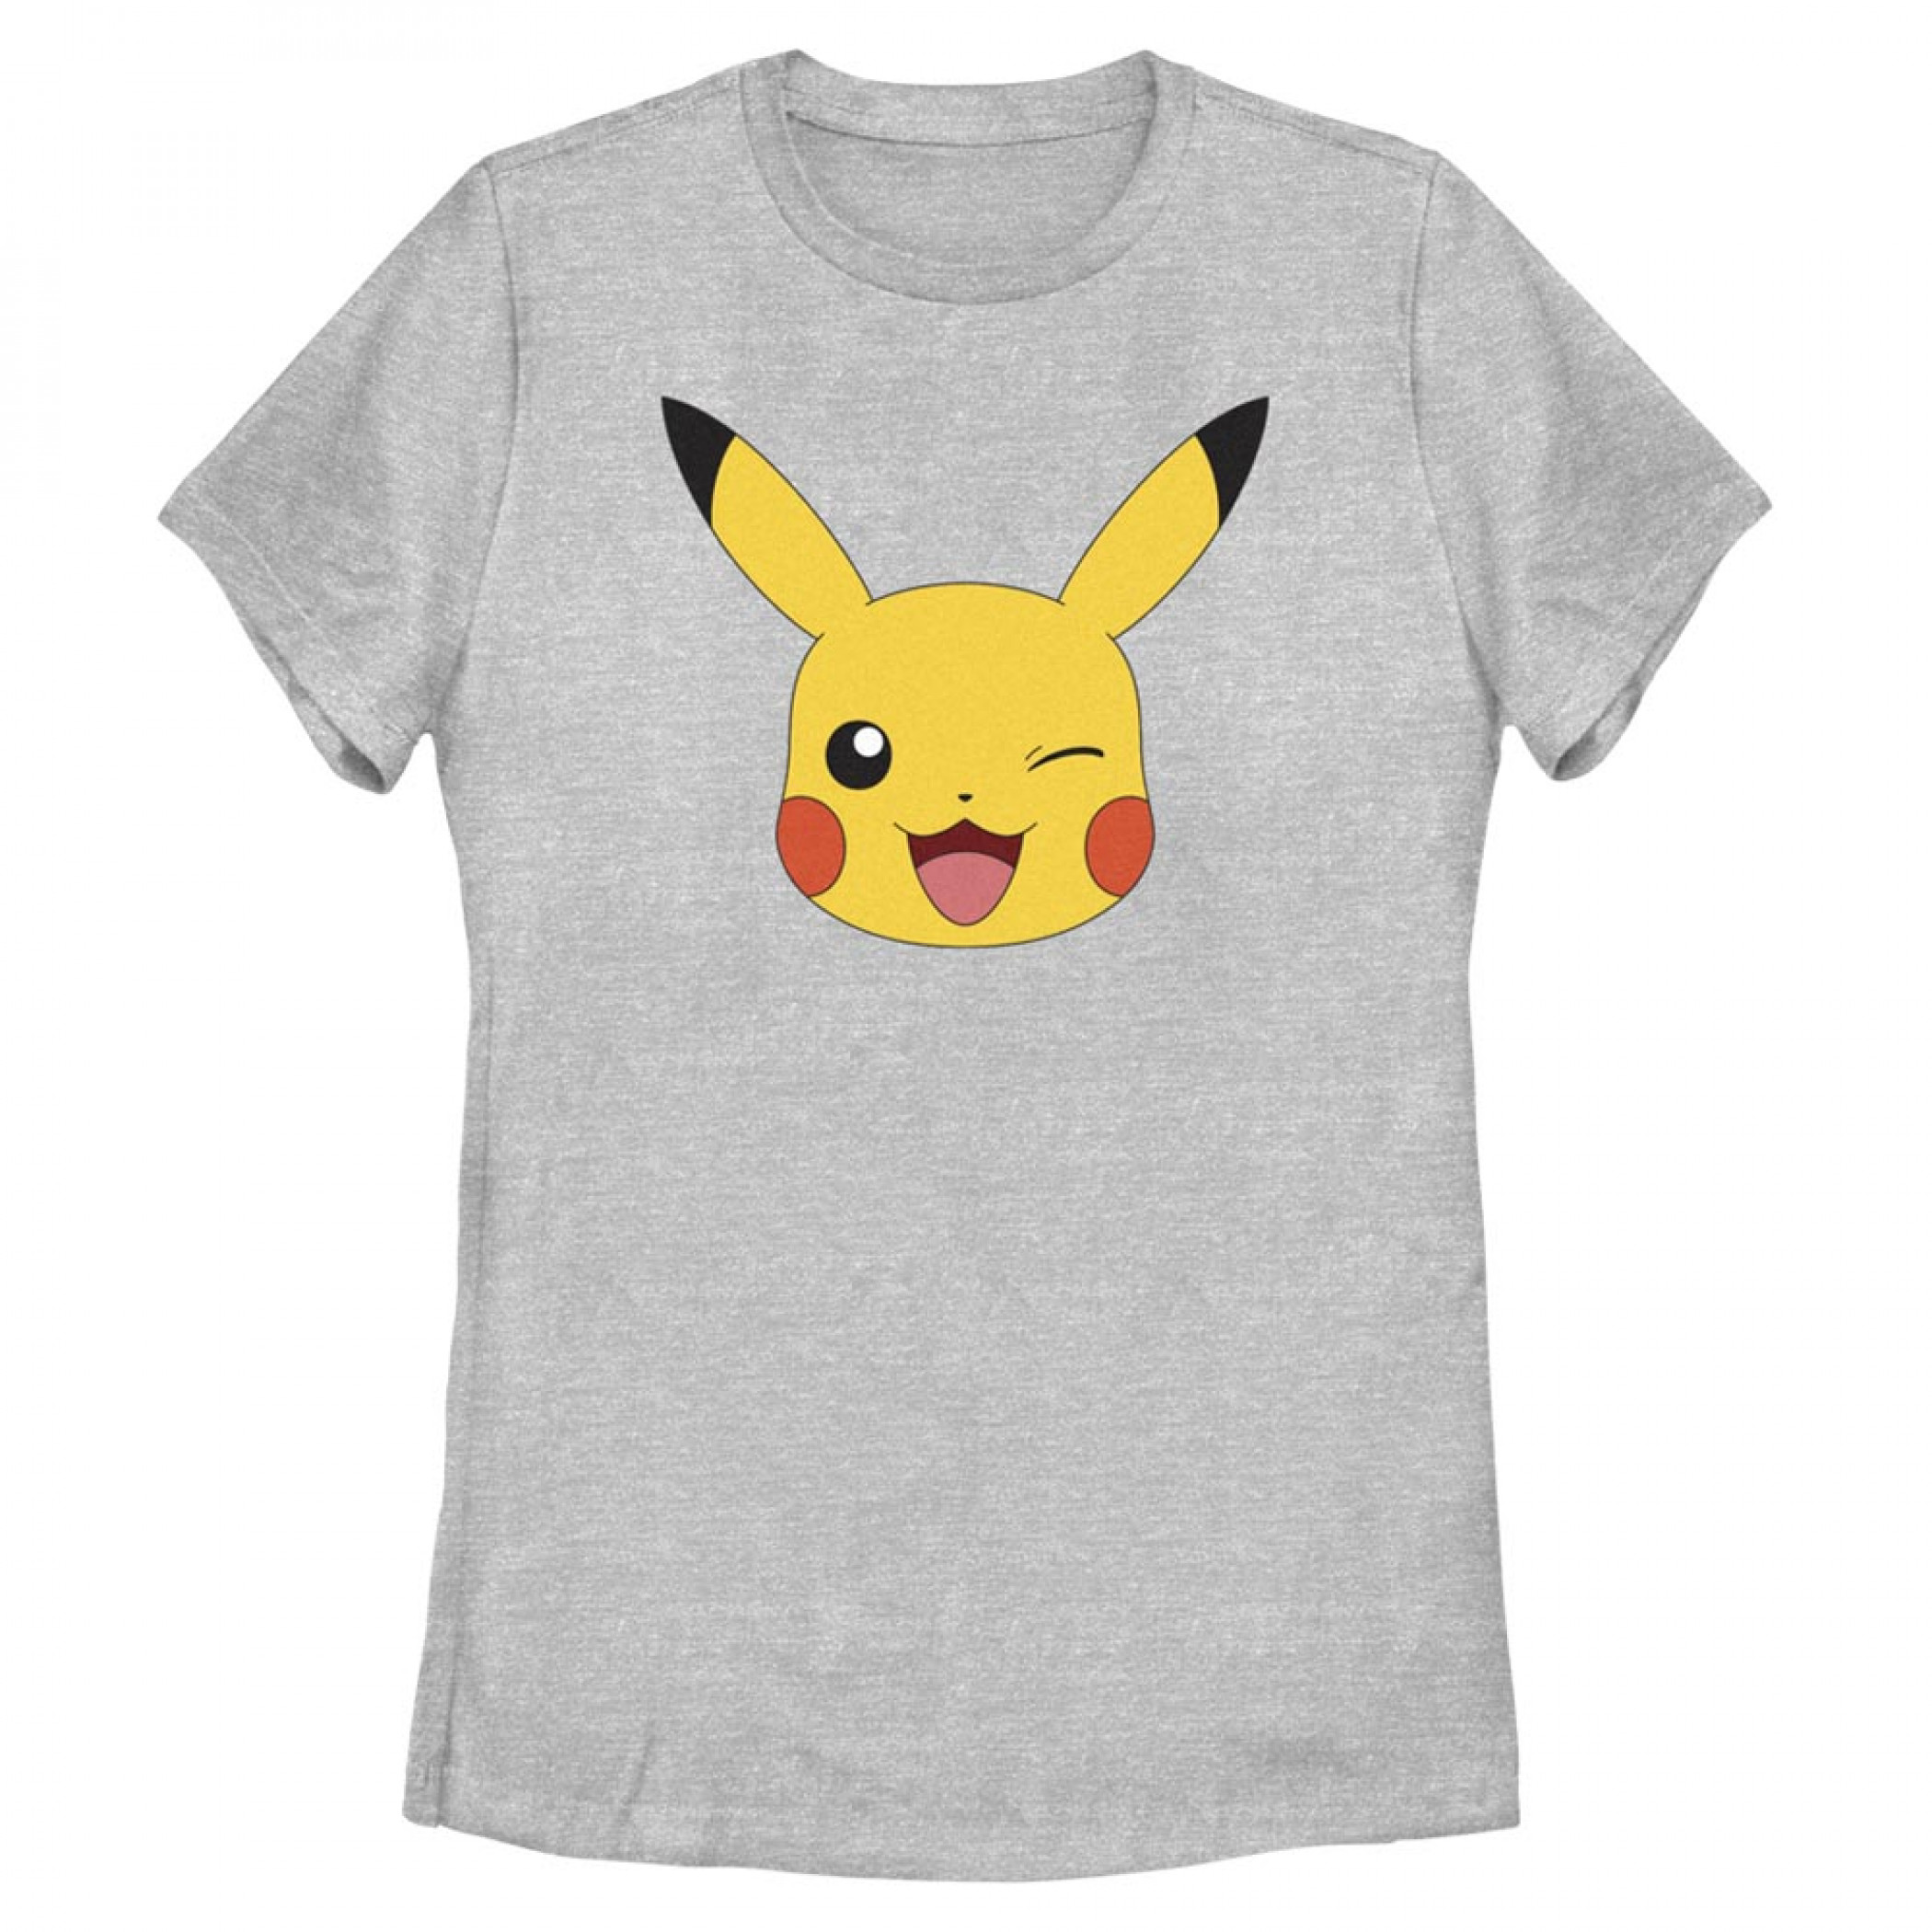 Pokémon Pikachu Face Women's T-Shirt